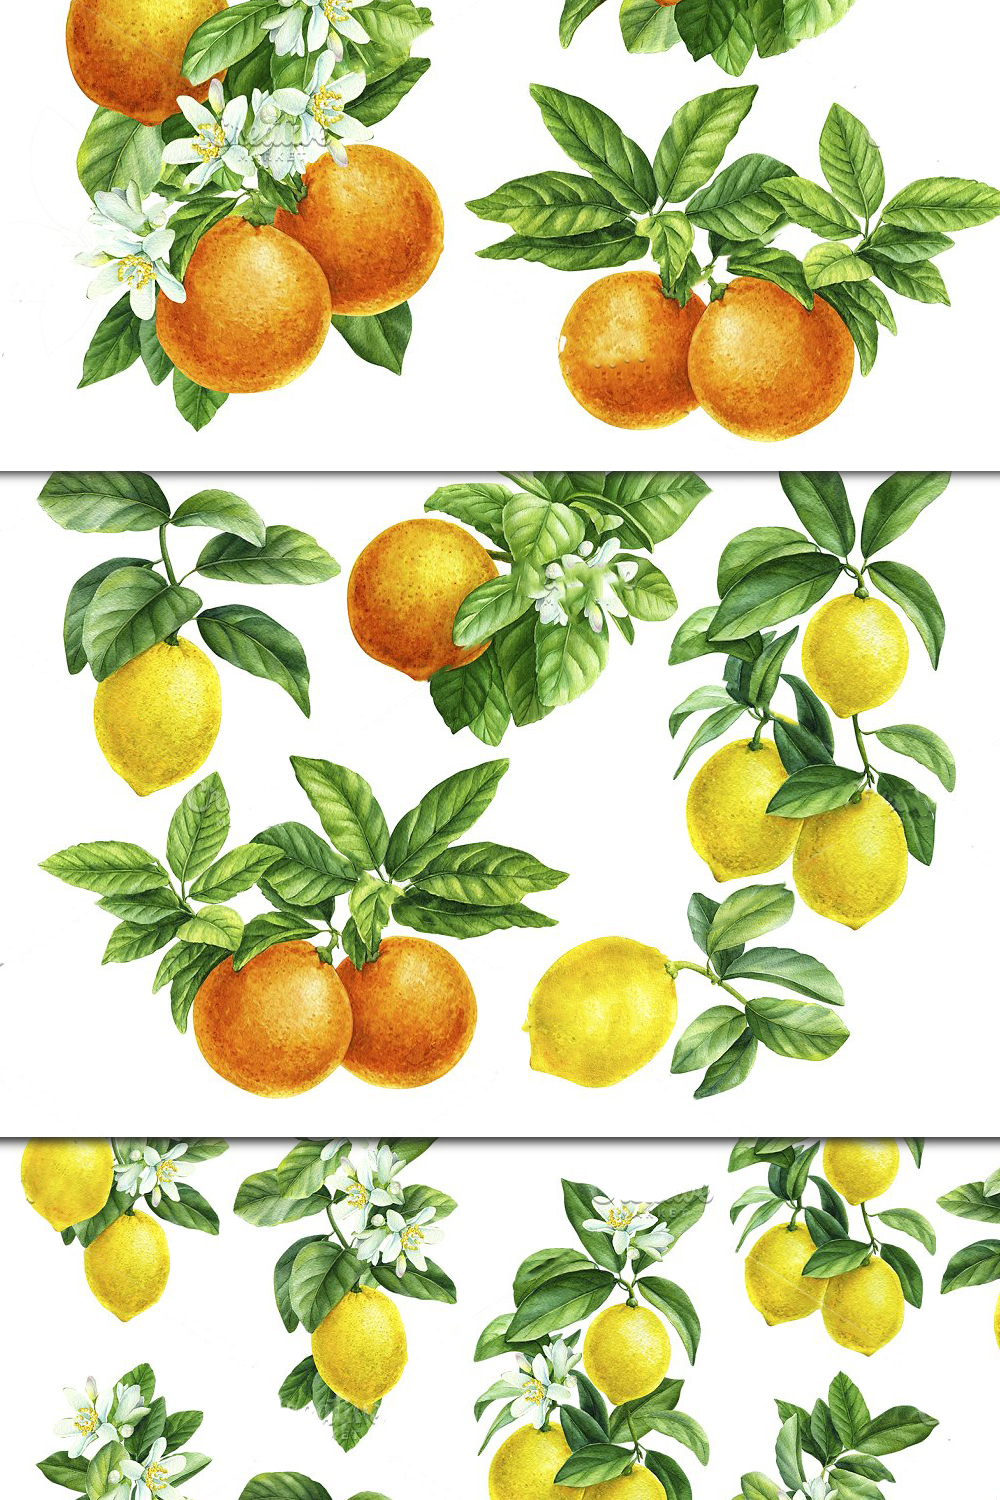 Citrus fruit in the image.